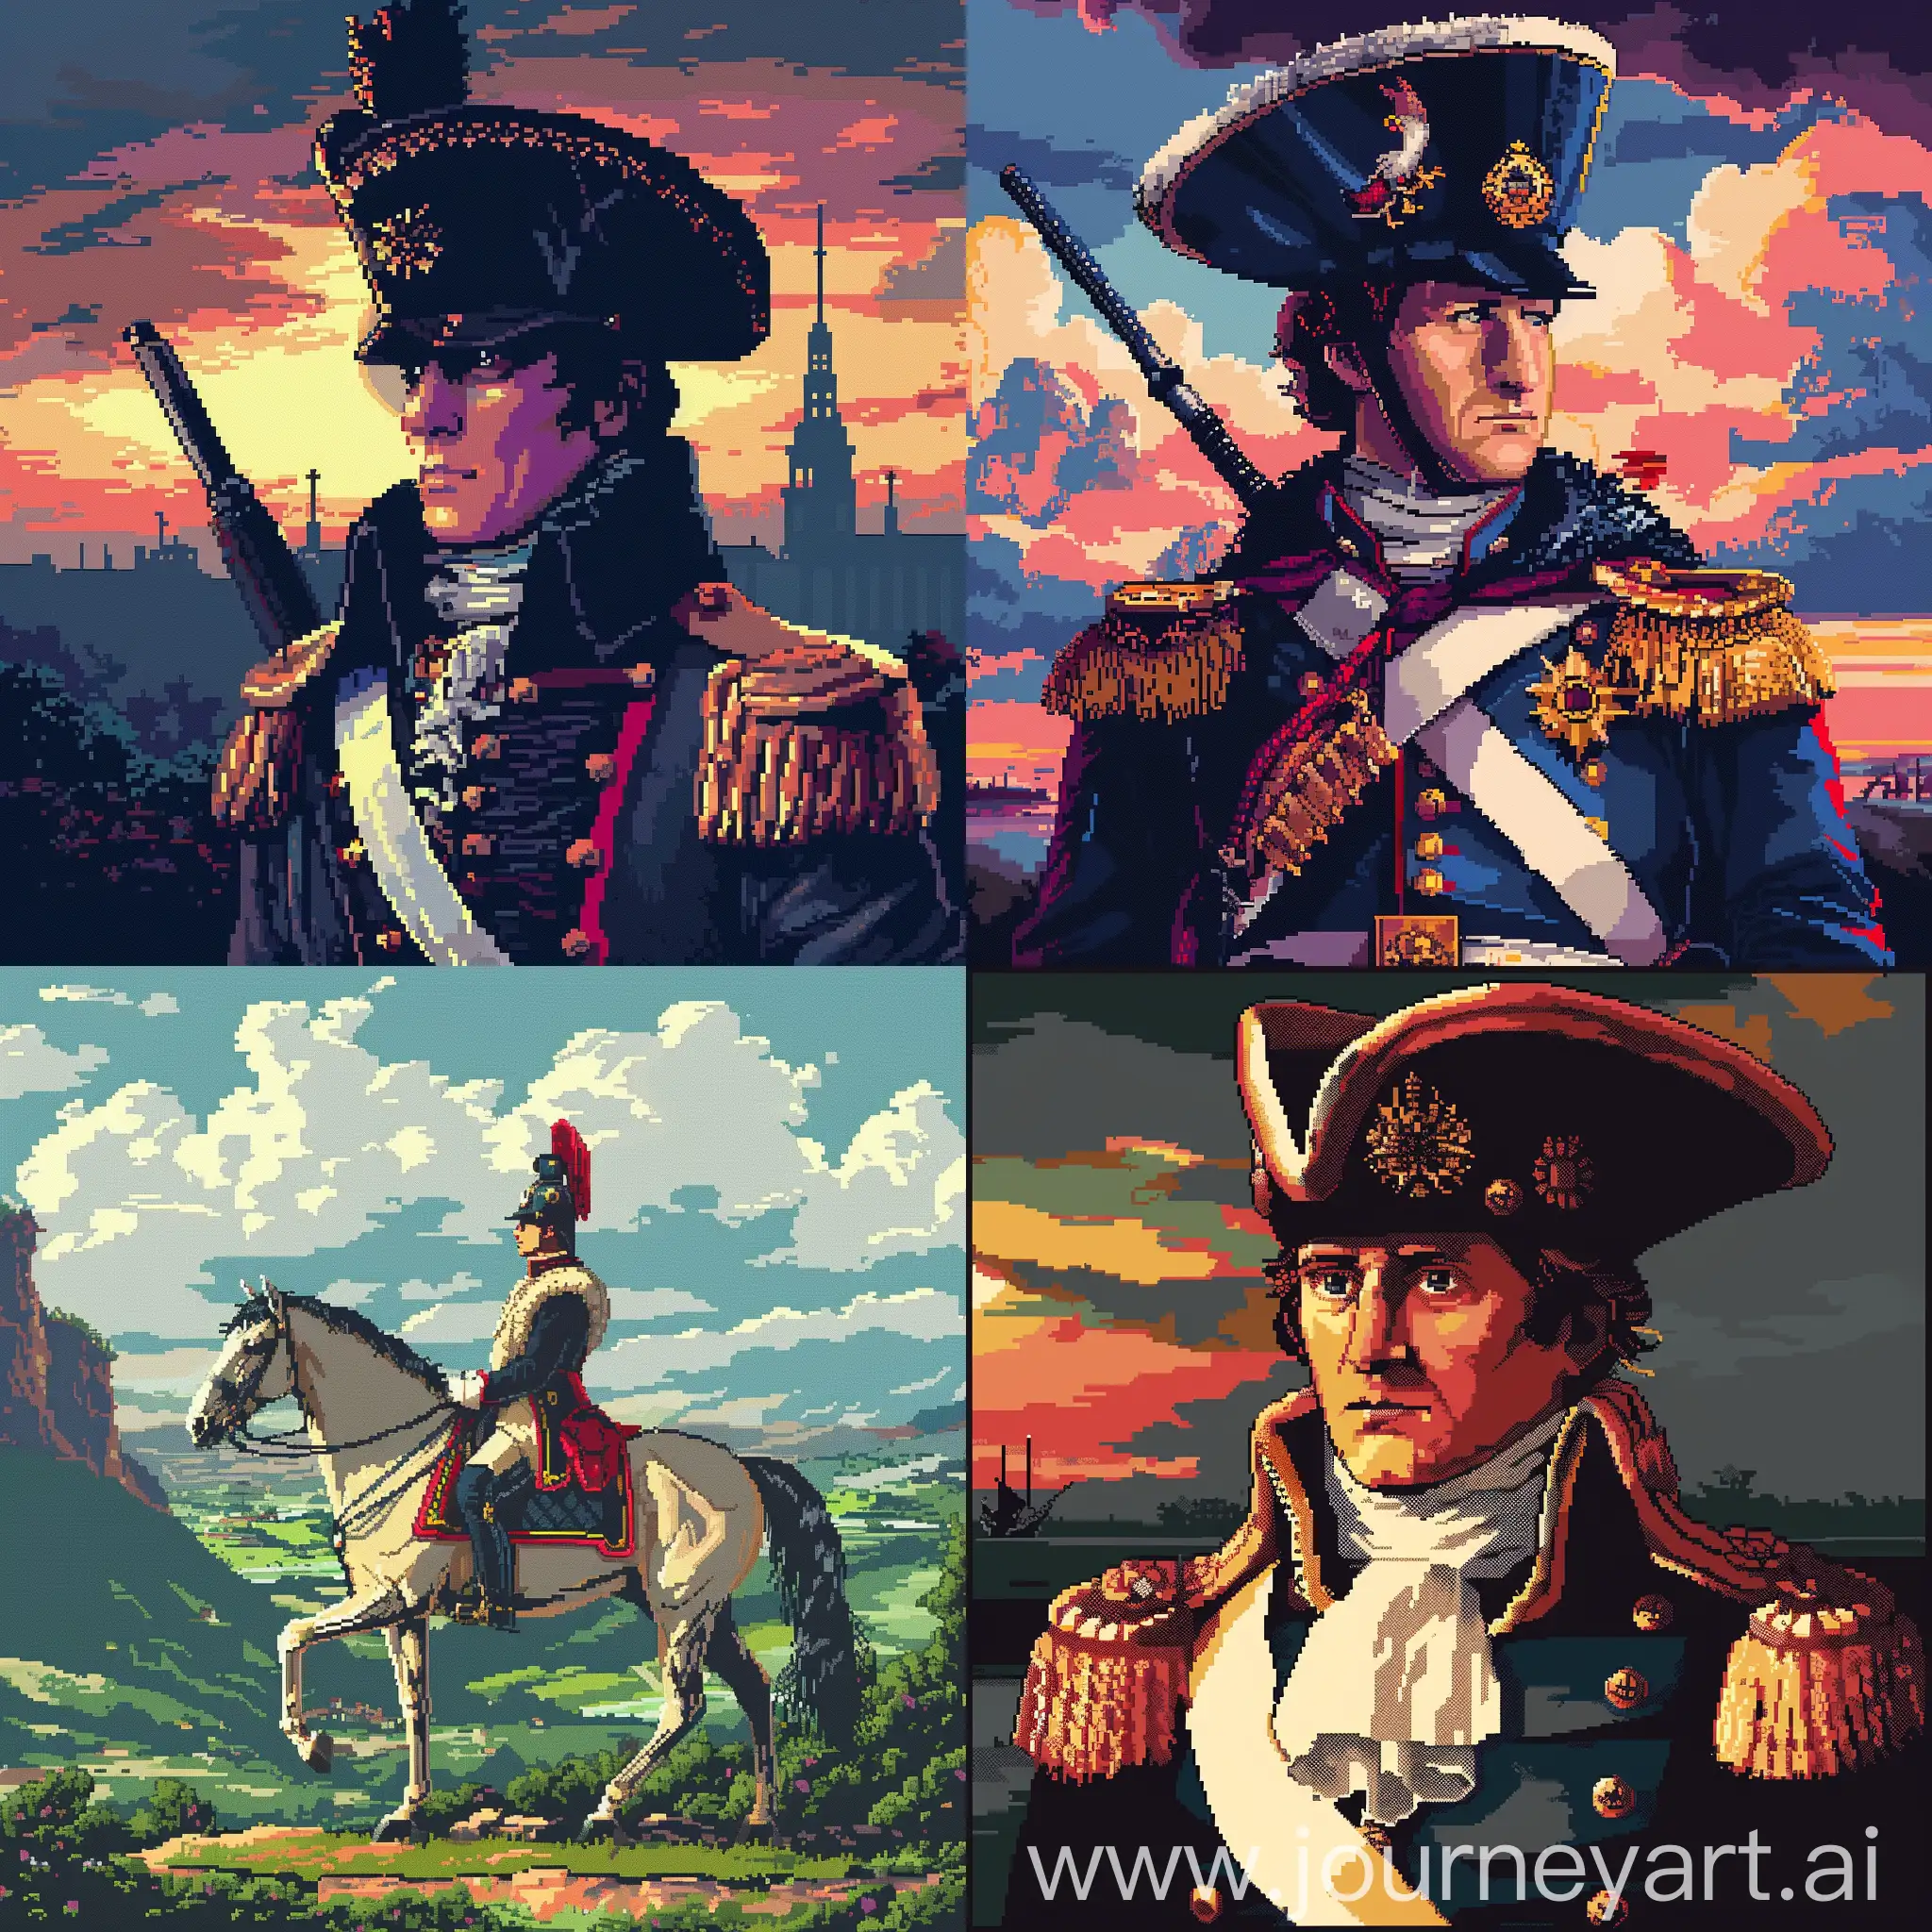 Napolean Bonaparte desktop wallpaper pixel art 8 bit retro